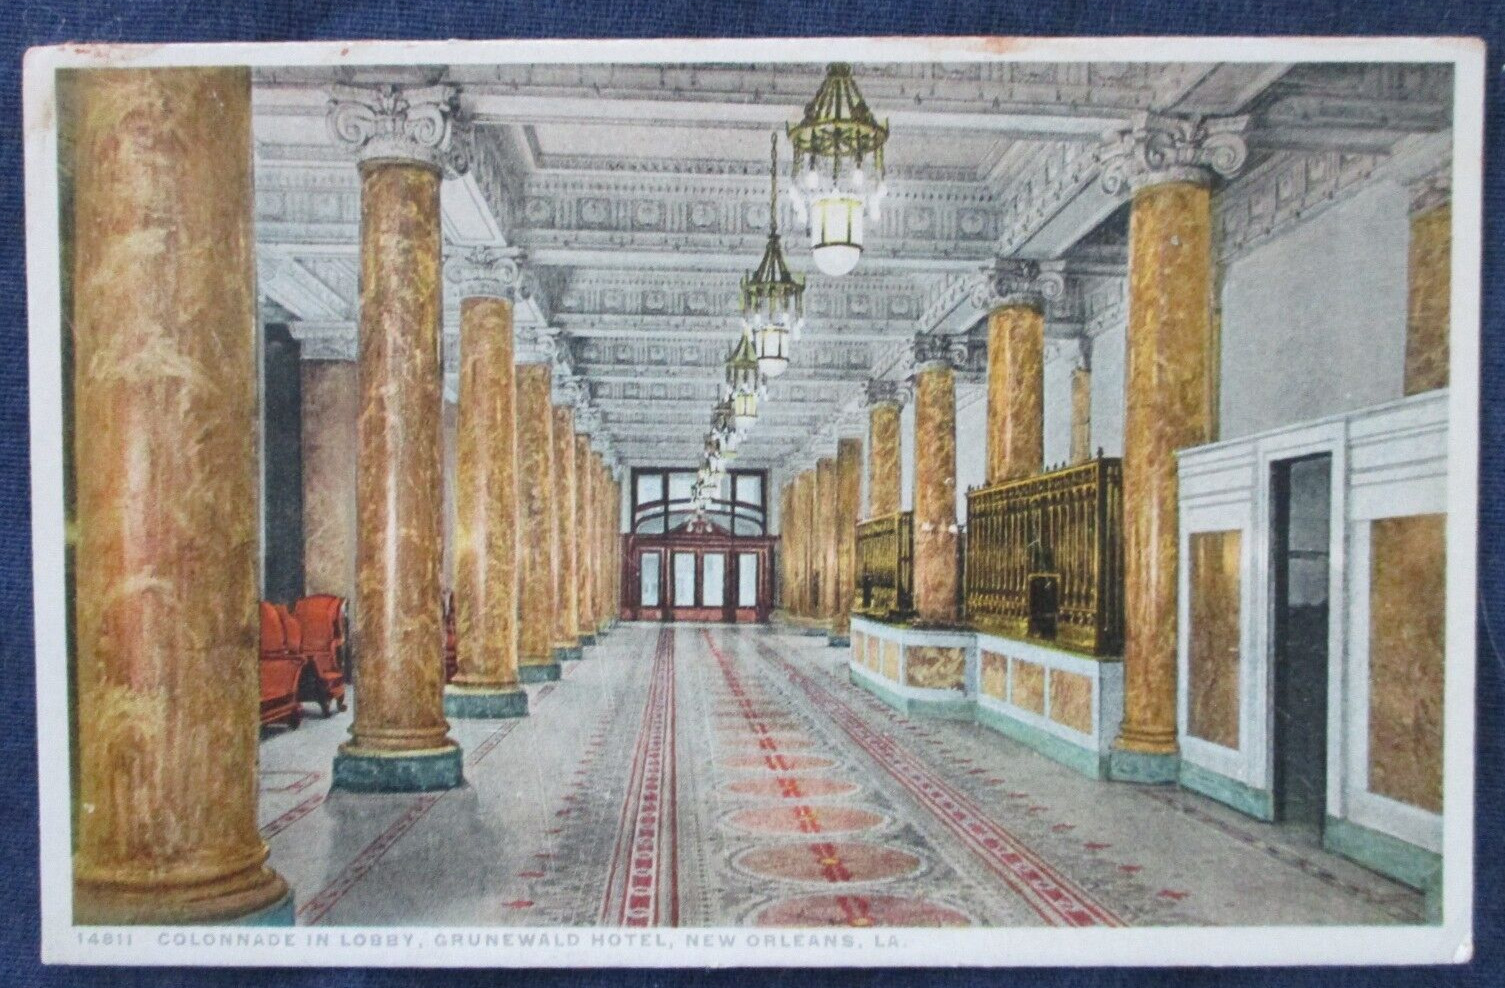 1910s New Orleans Louisiana Grunewald Hotel Lobby Interior Postcard